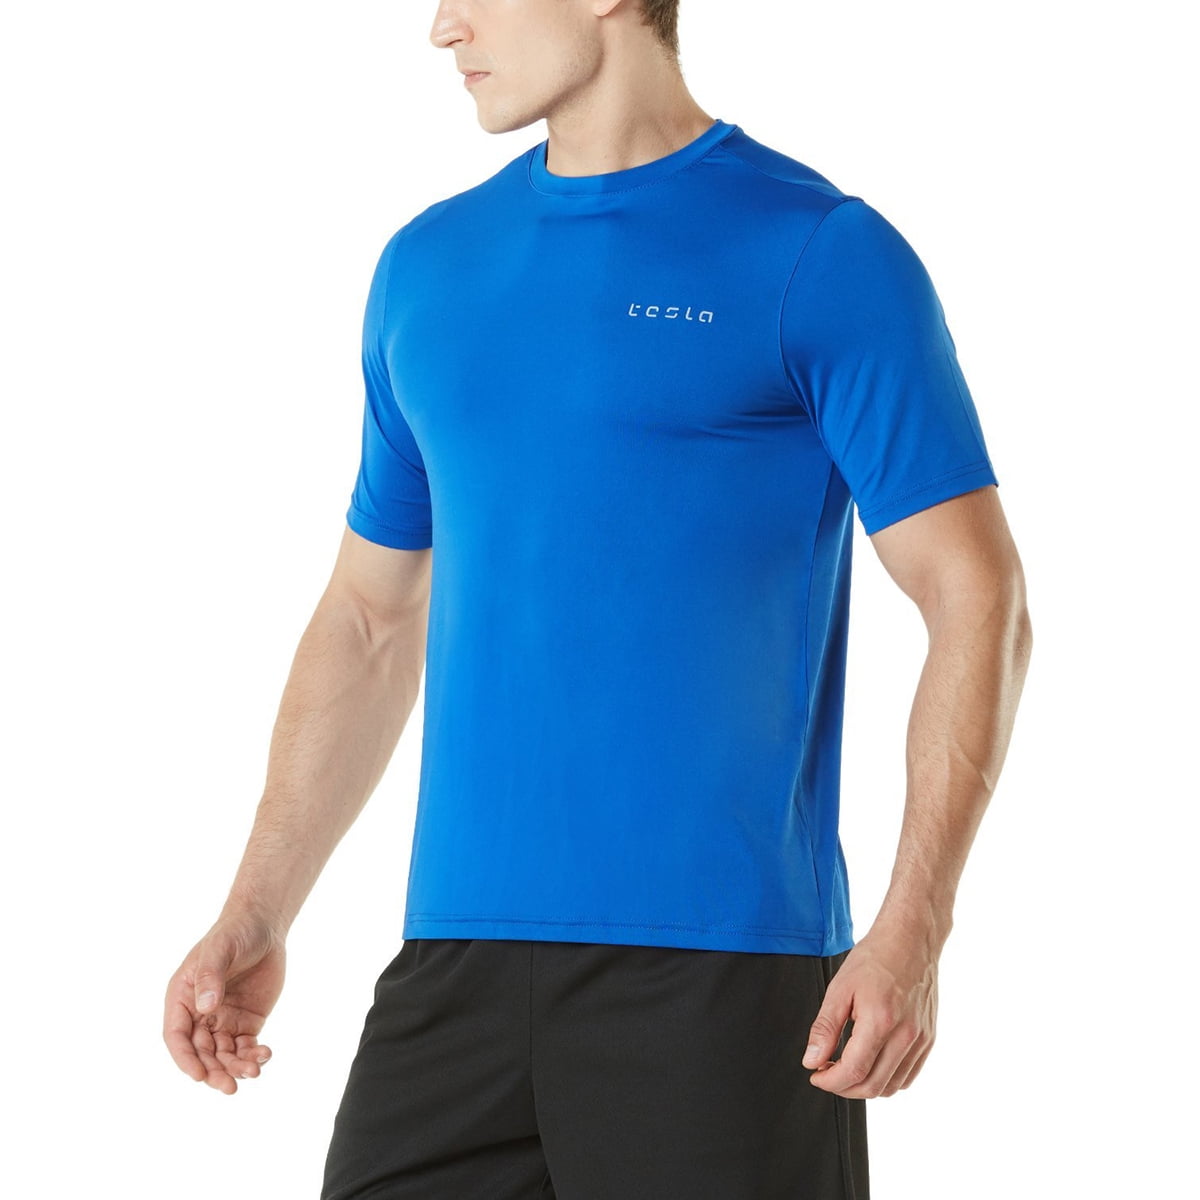 TSLA Boyss HyperDri Short Sleeve T-Shirt Athletic Cool Running Top 